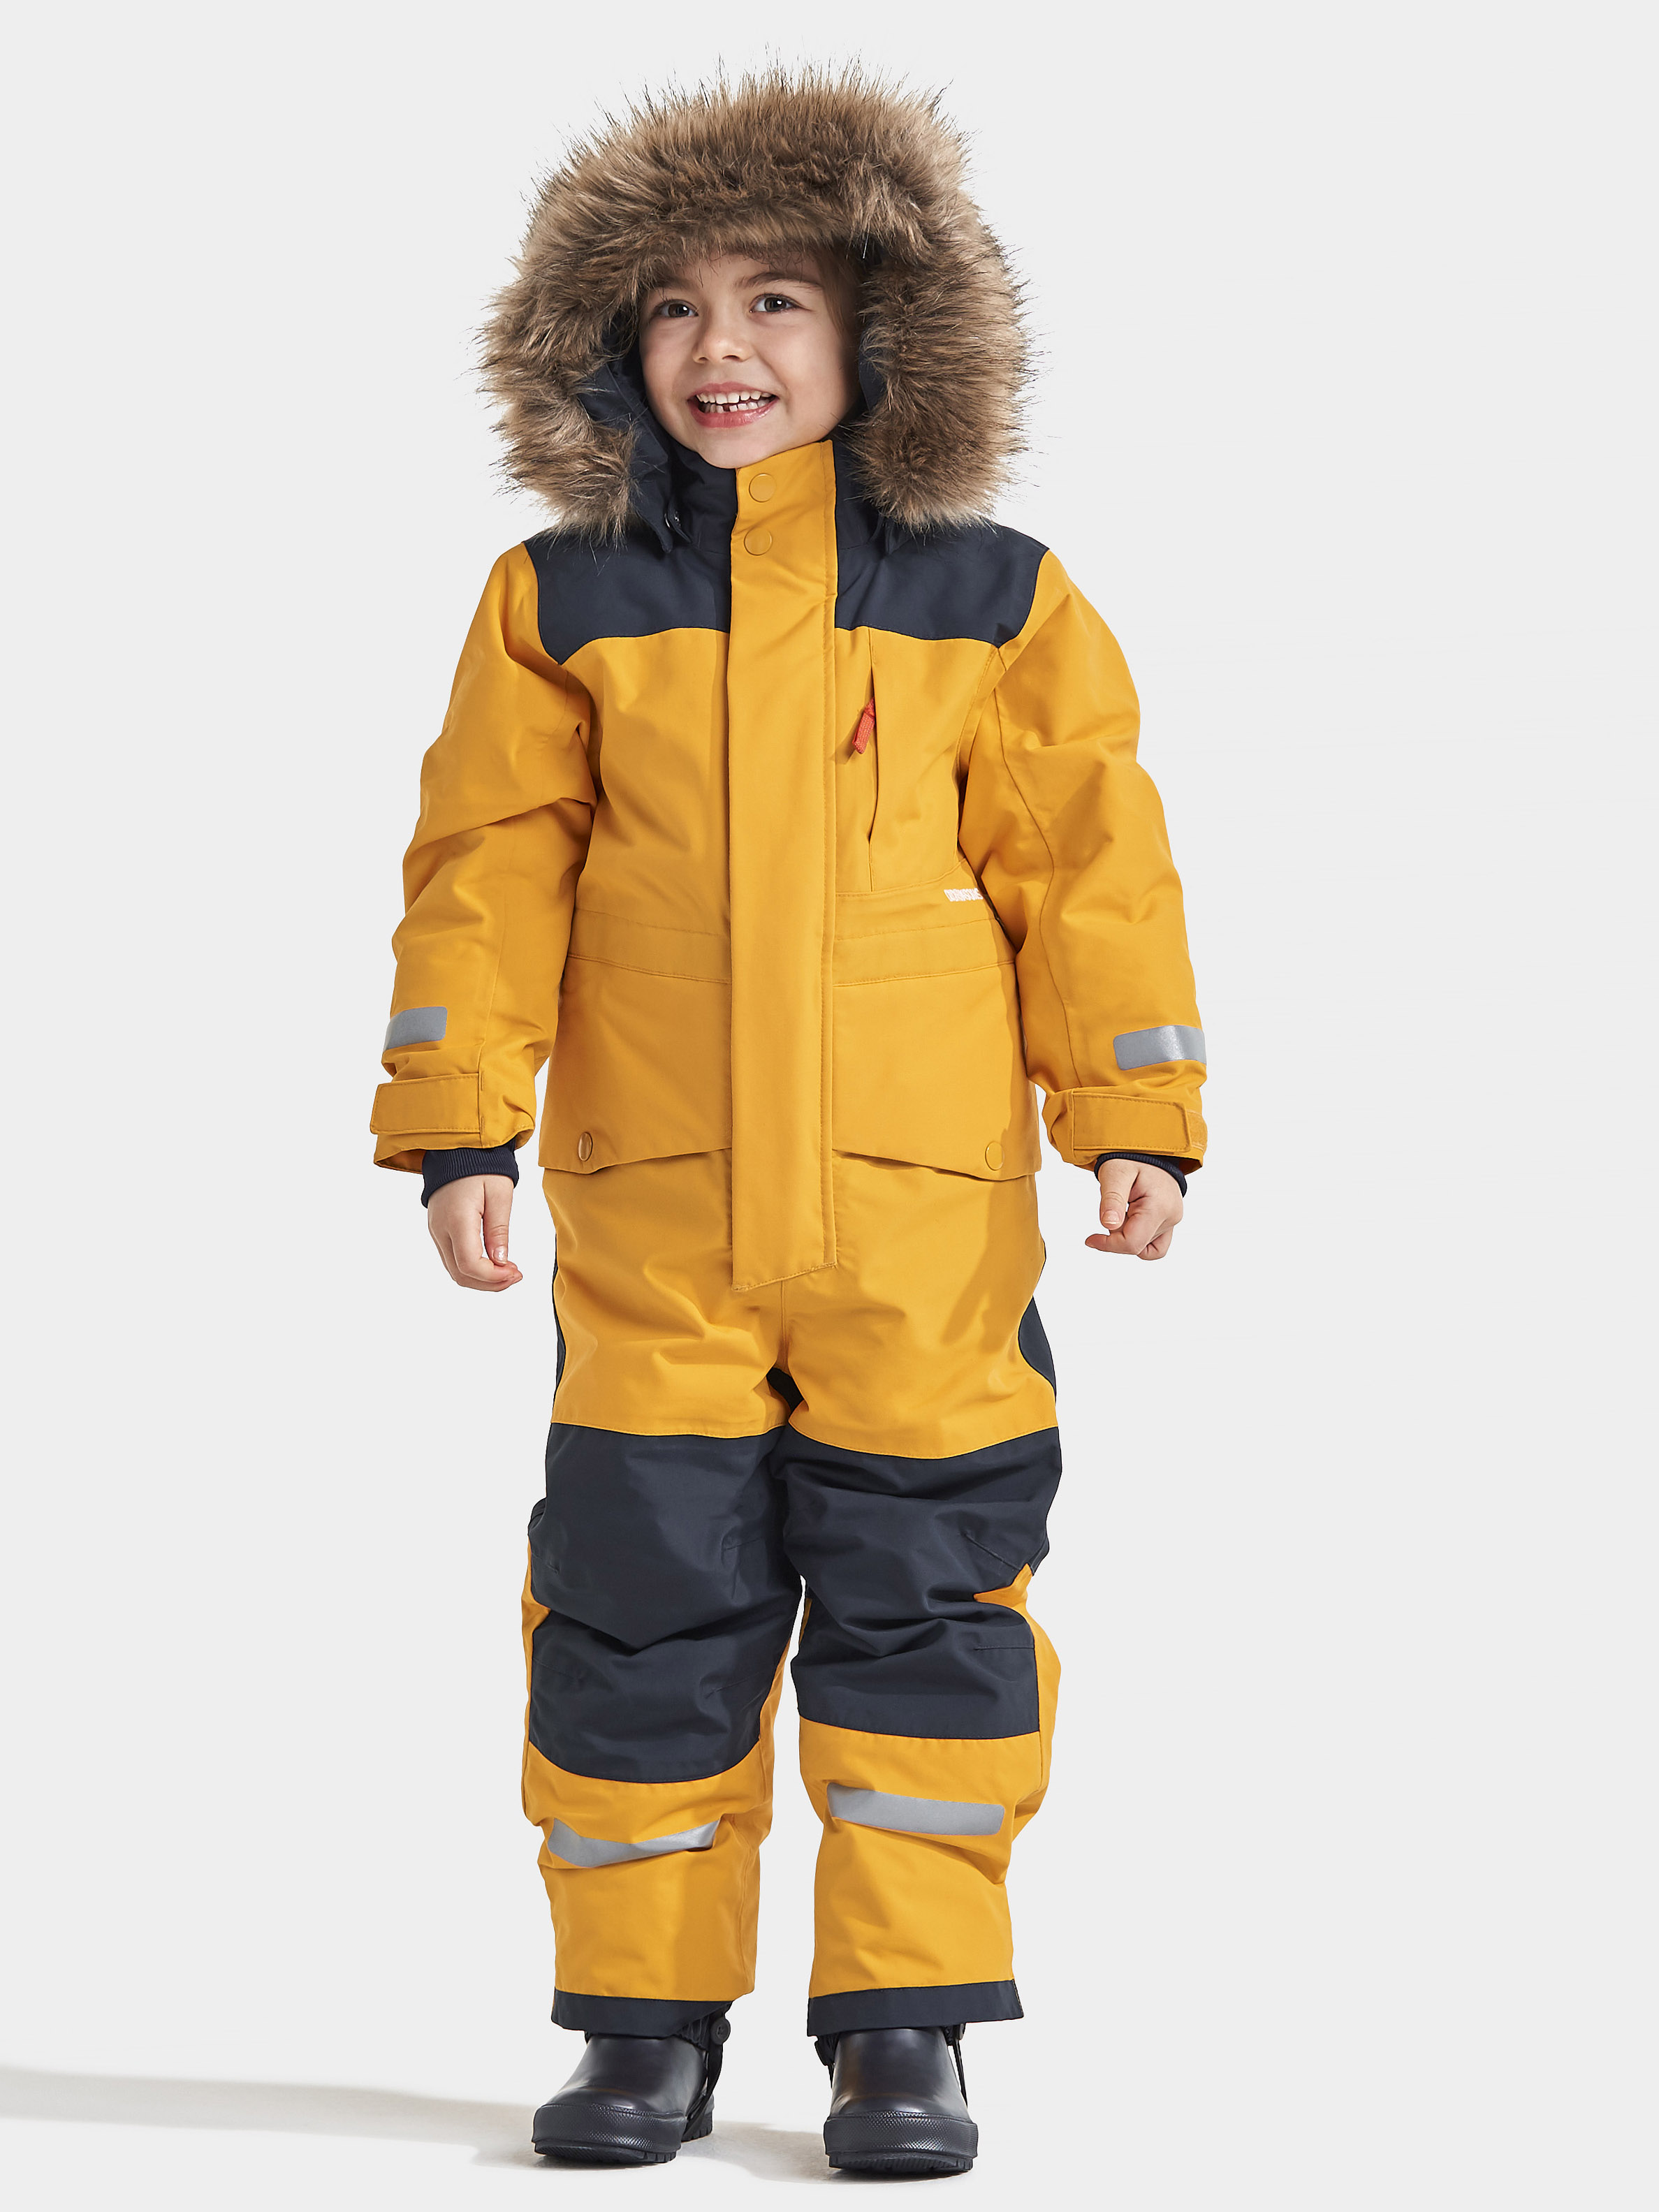 Didriksons Bjornen 4 Kids Insulated Waterproof Snowsuit | eBay